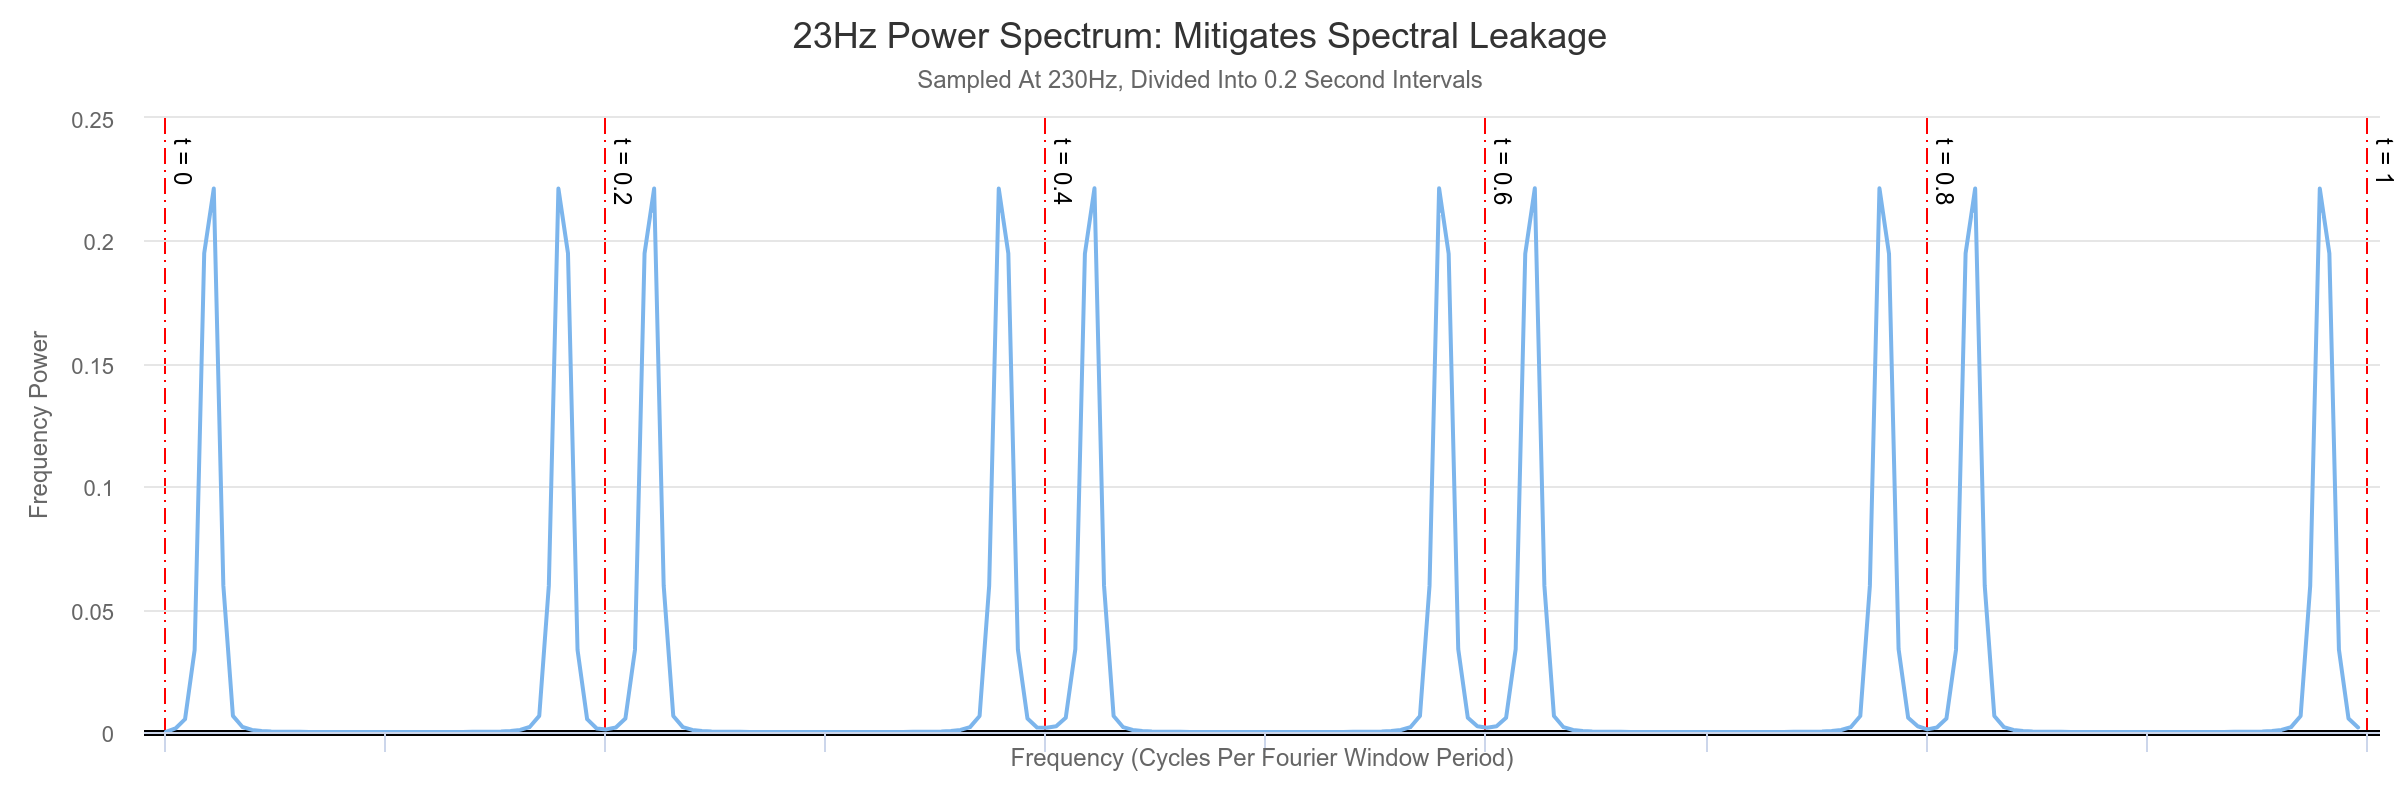 23hz Spectral Leakage Mitigated